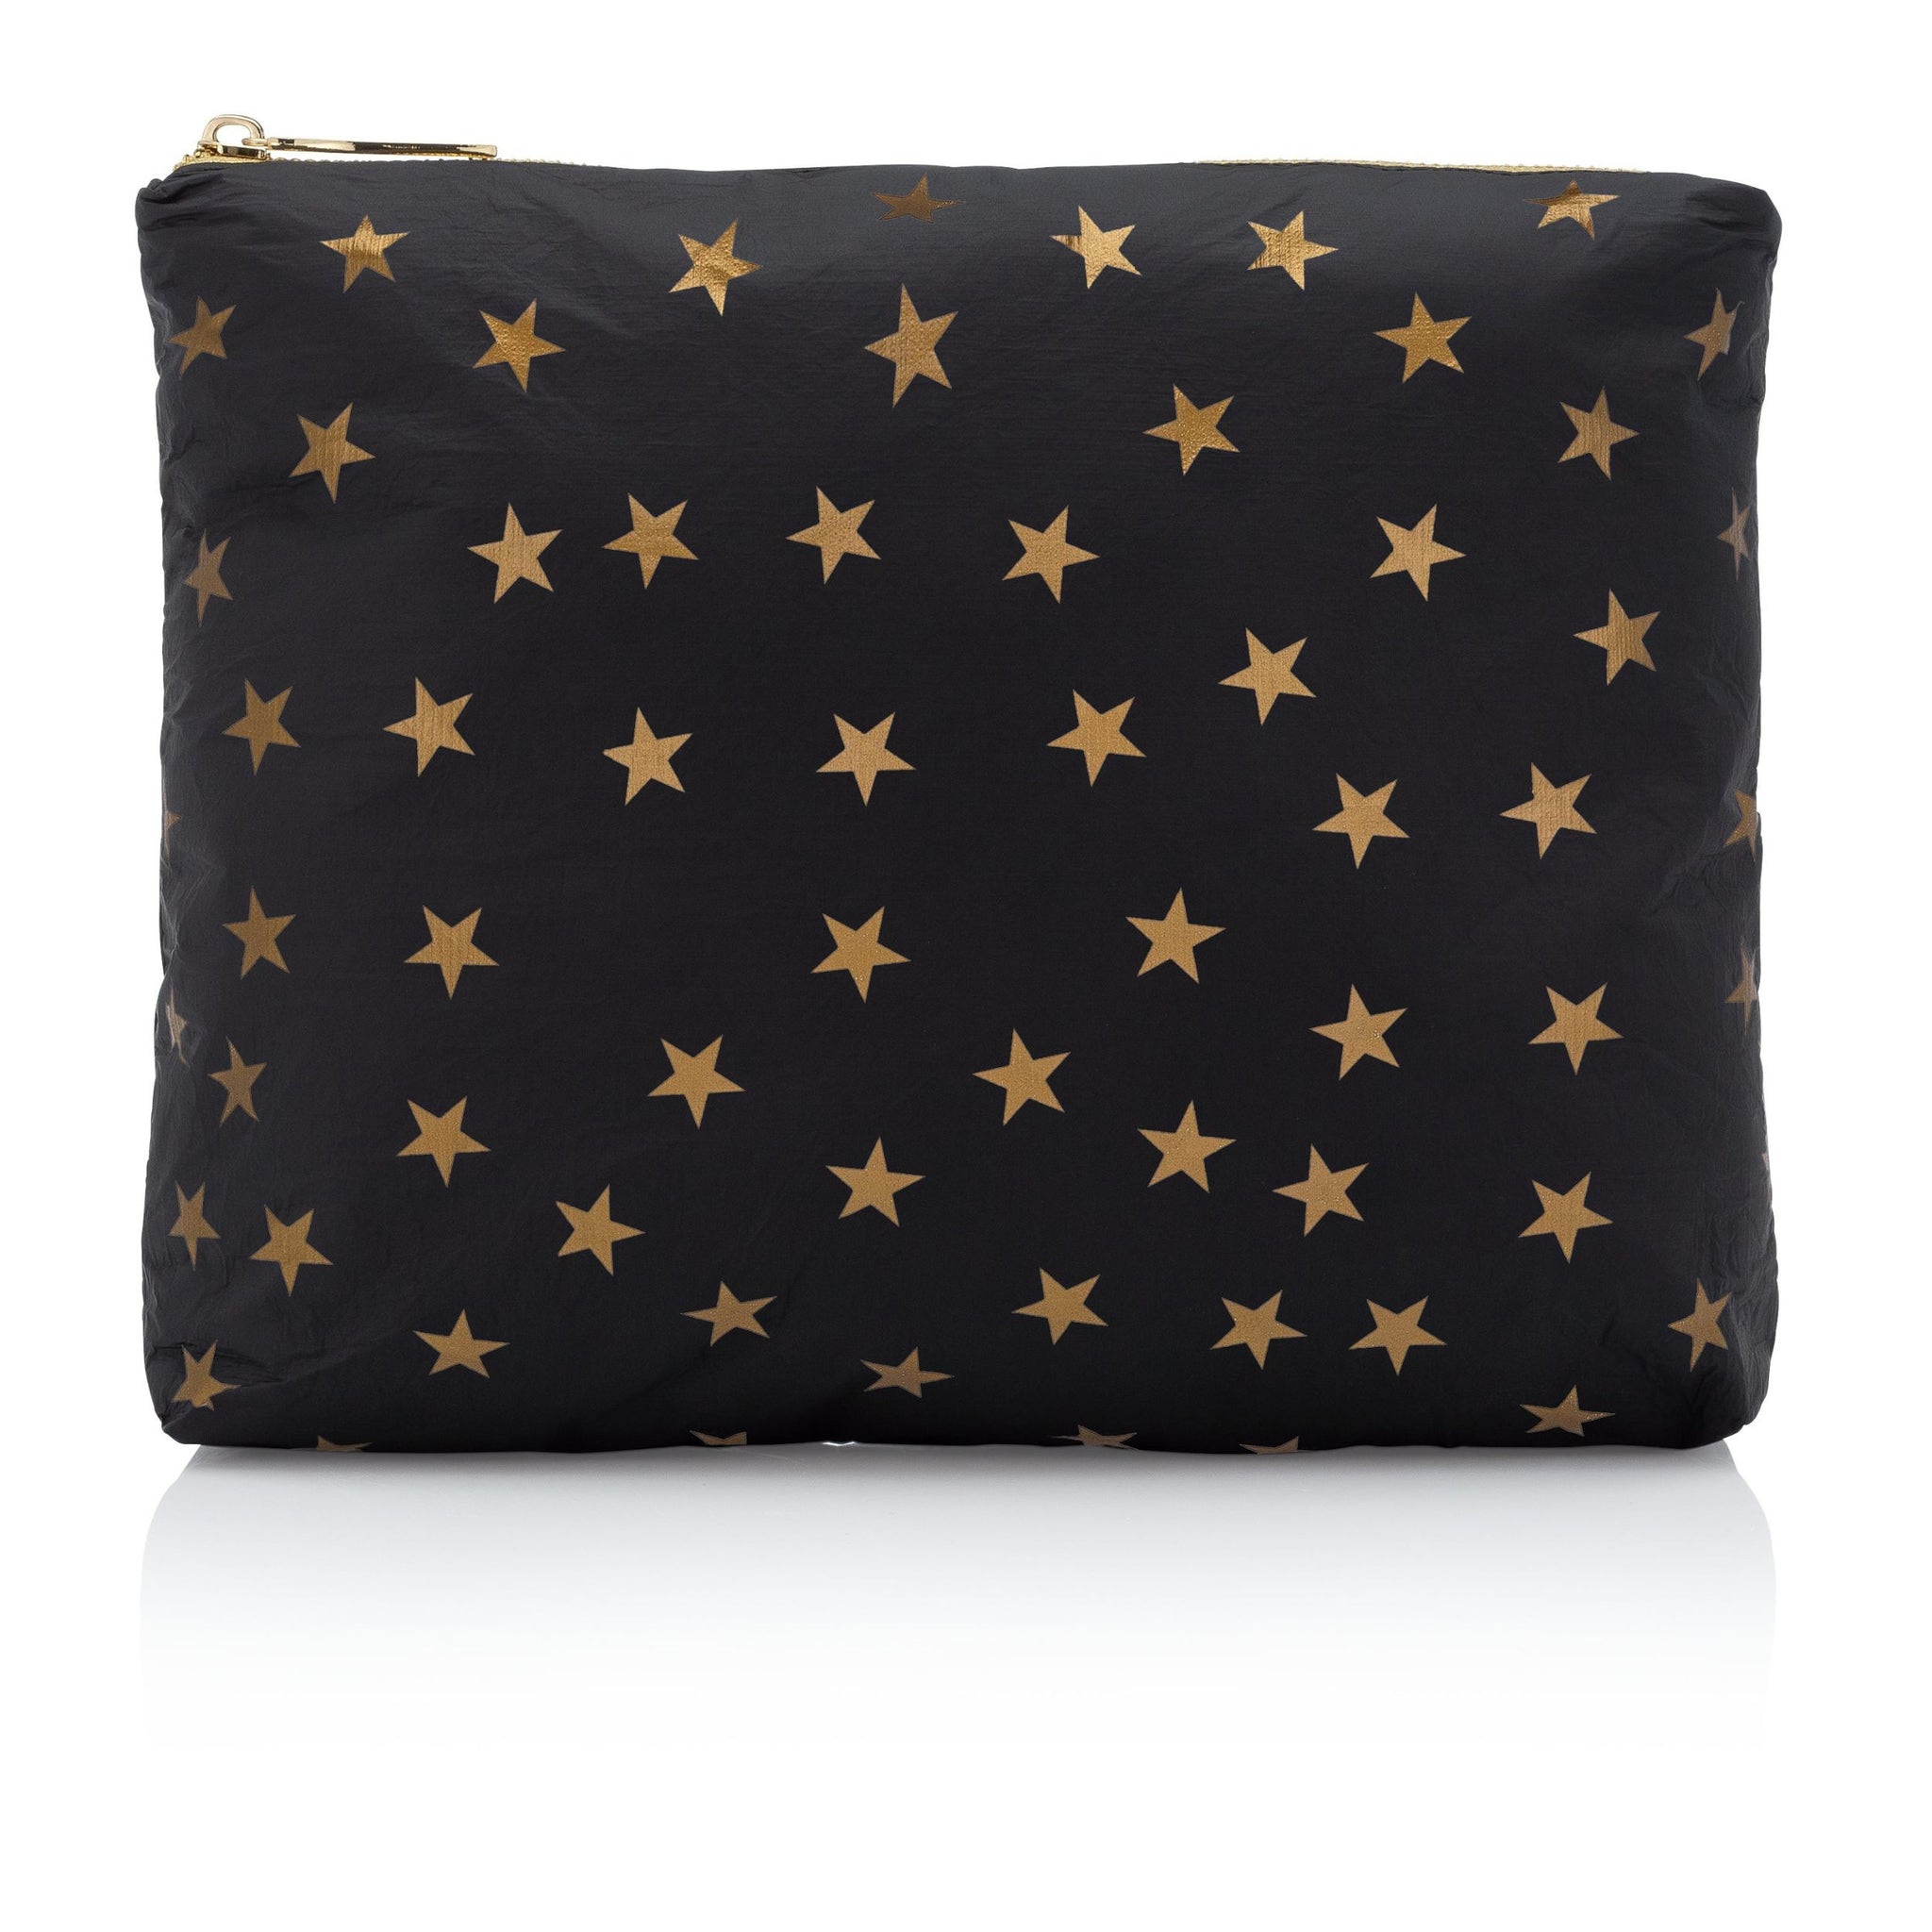 Myriad gold stars, medium zipper pouch in black